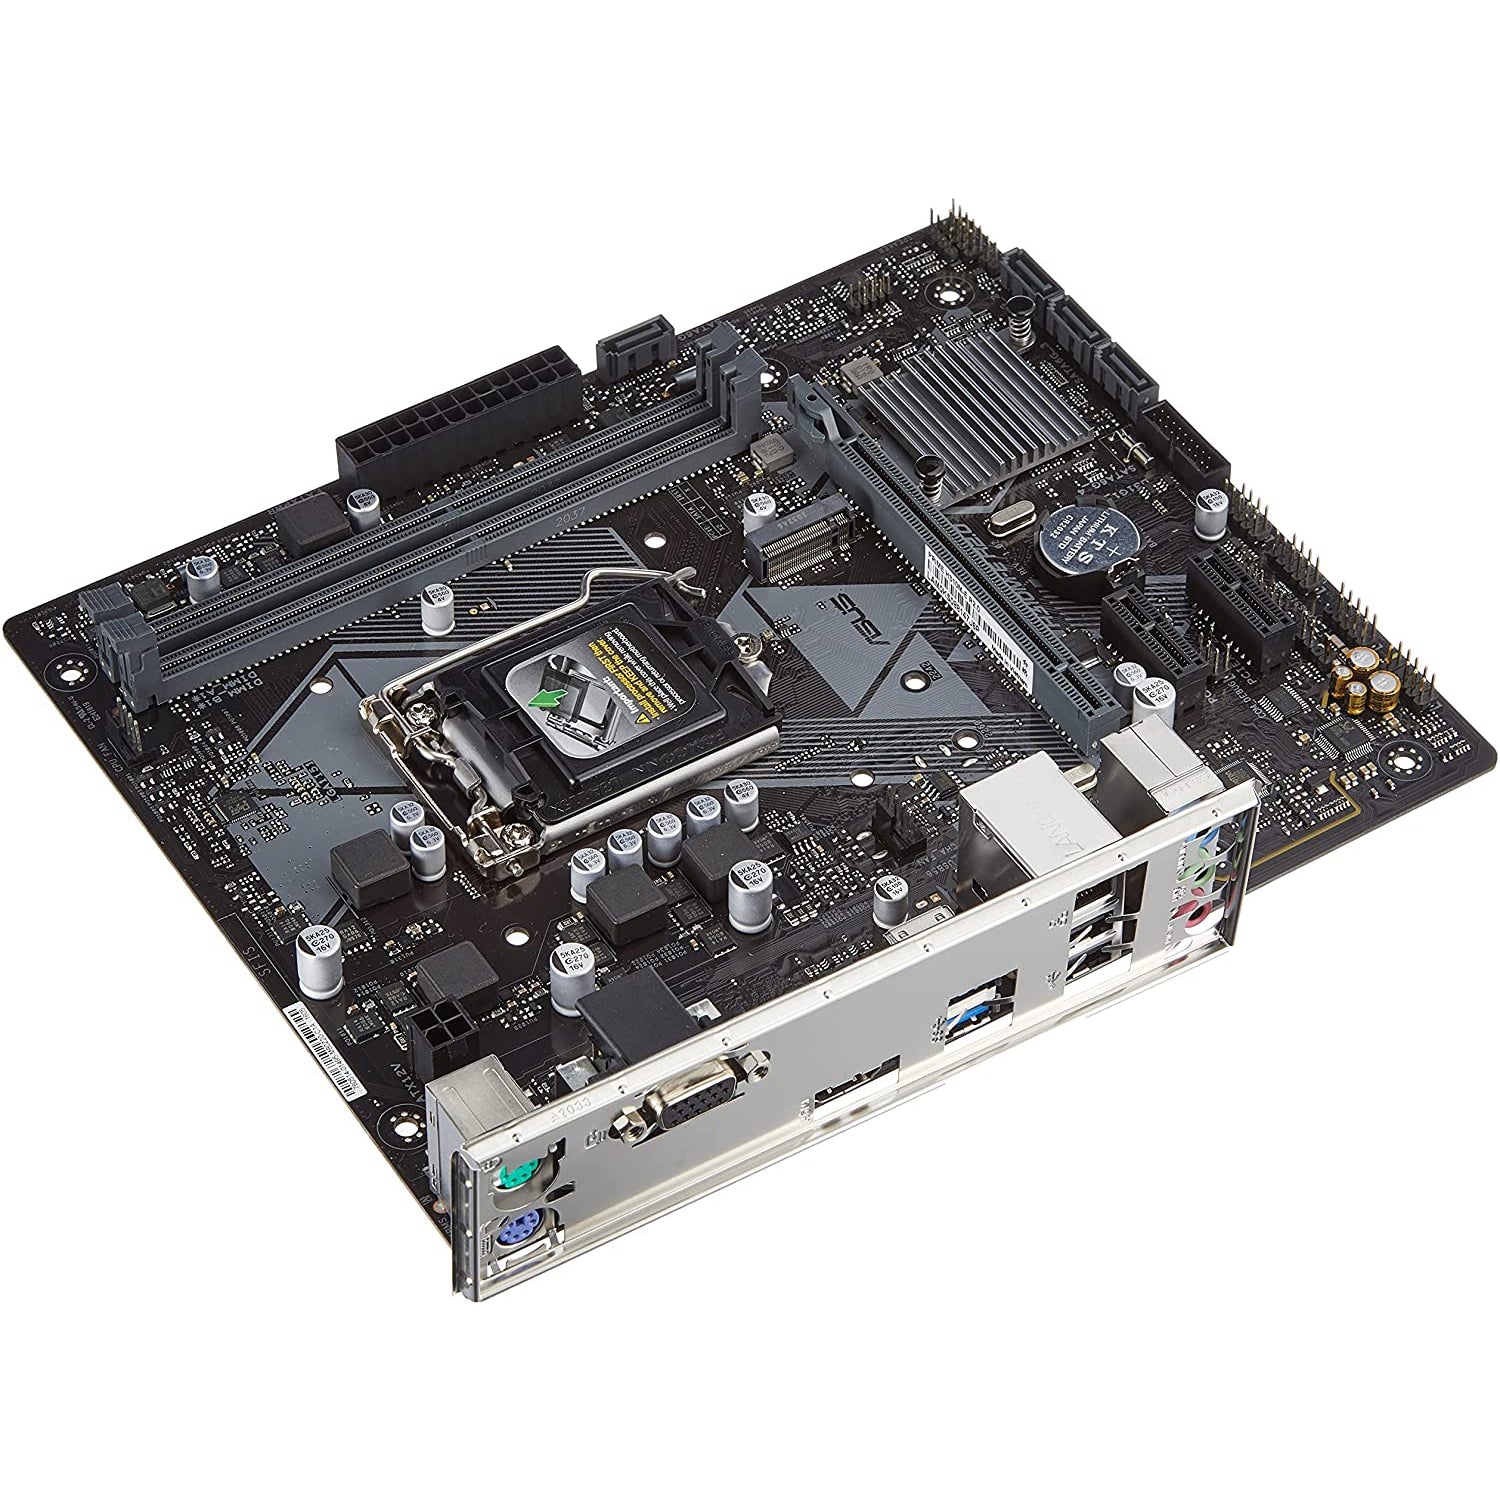 ASUS Prime H310M-E R2.0 Micro ATX Intel H310 DDR4-SDRAM Motherboard